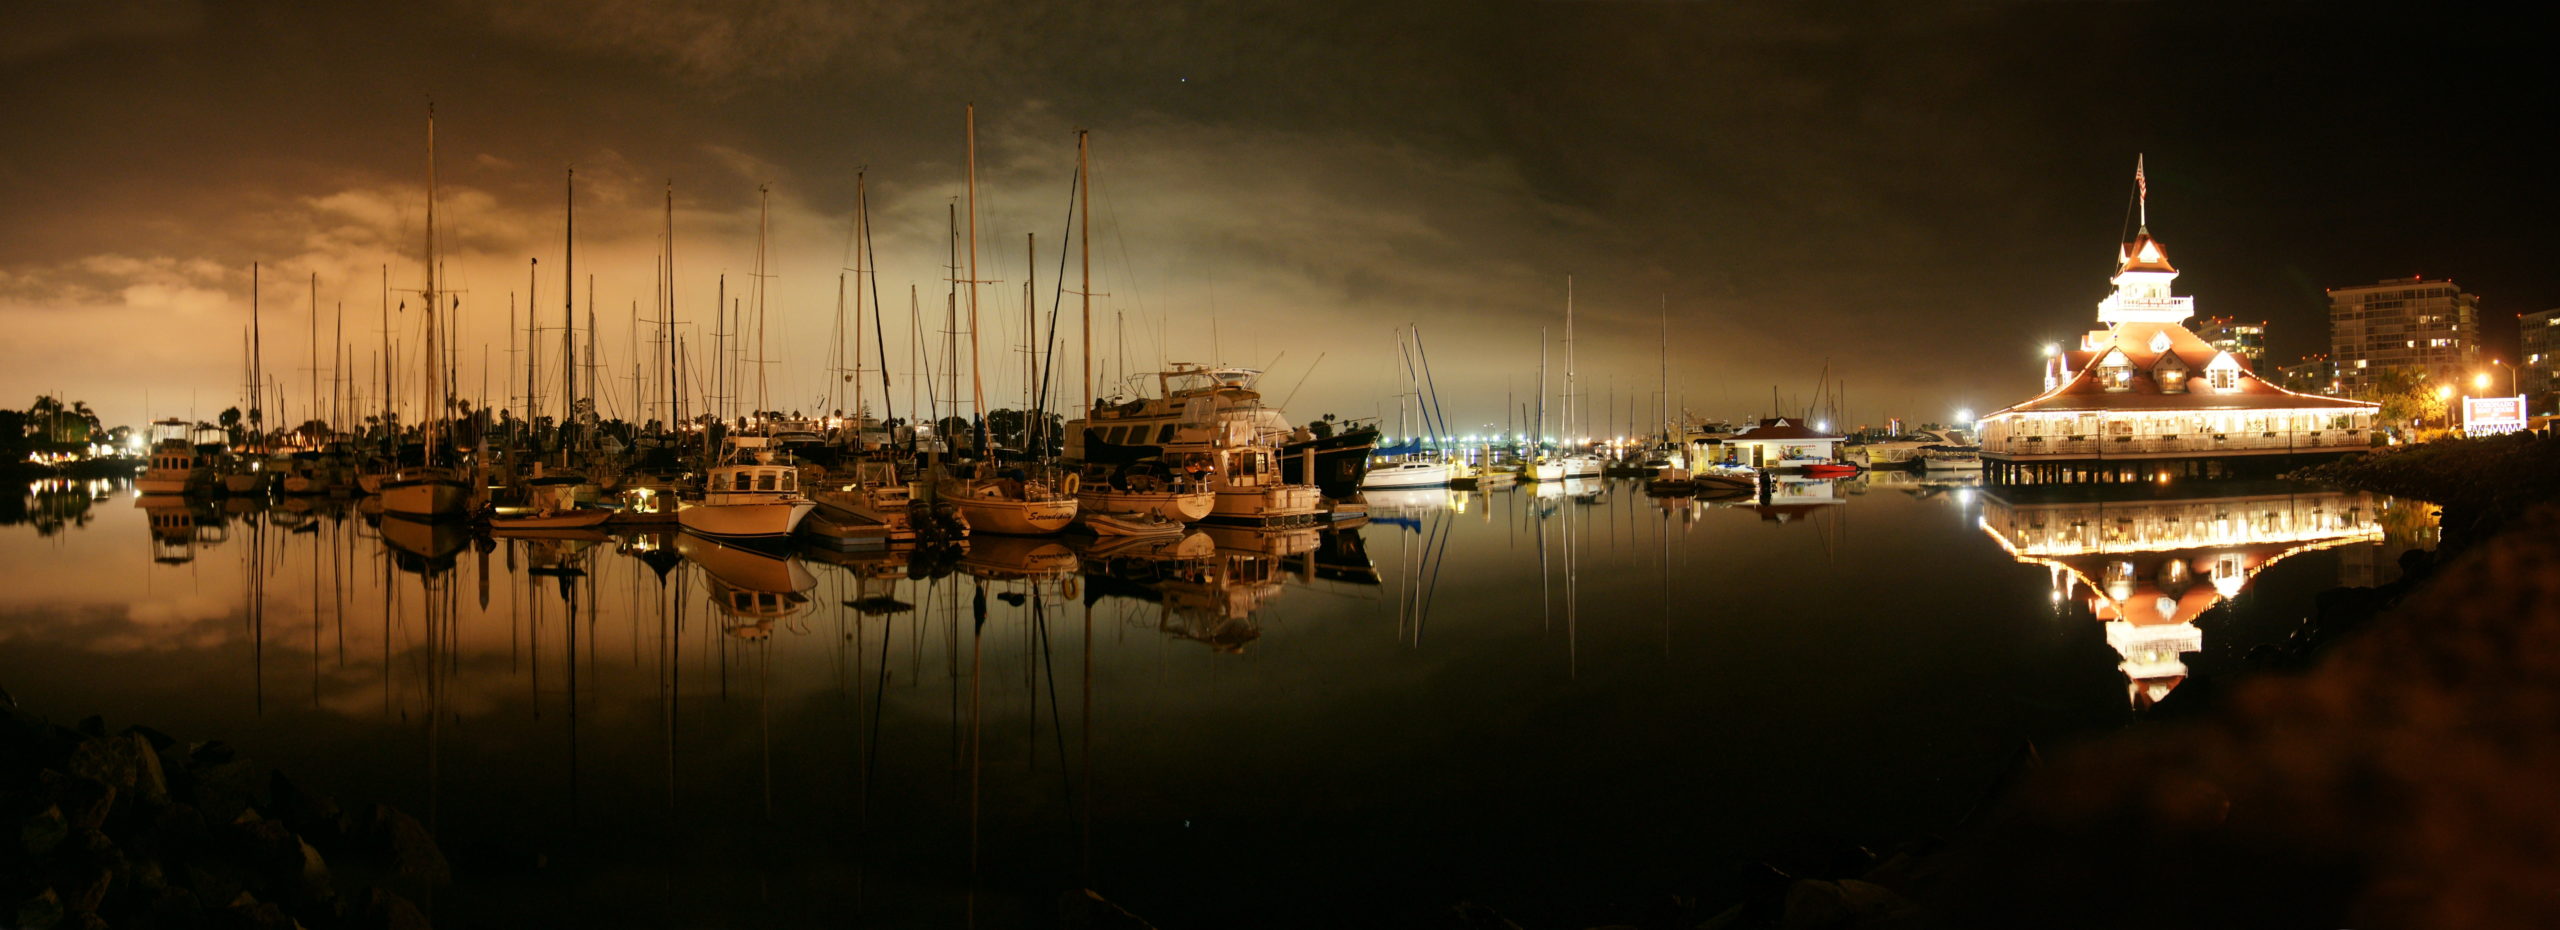 Coronado bay, at night.